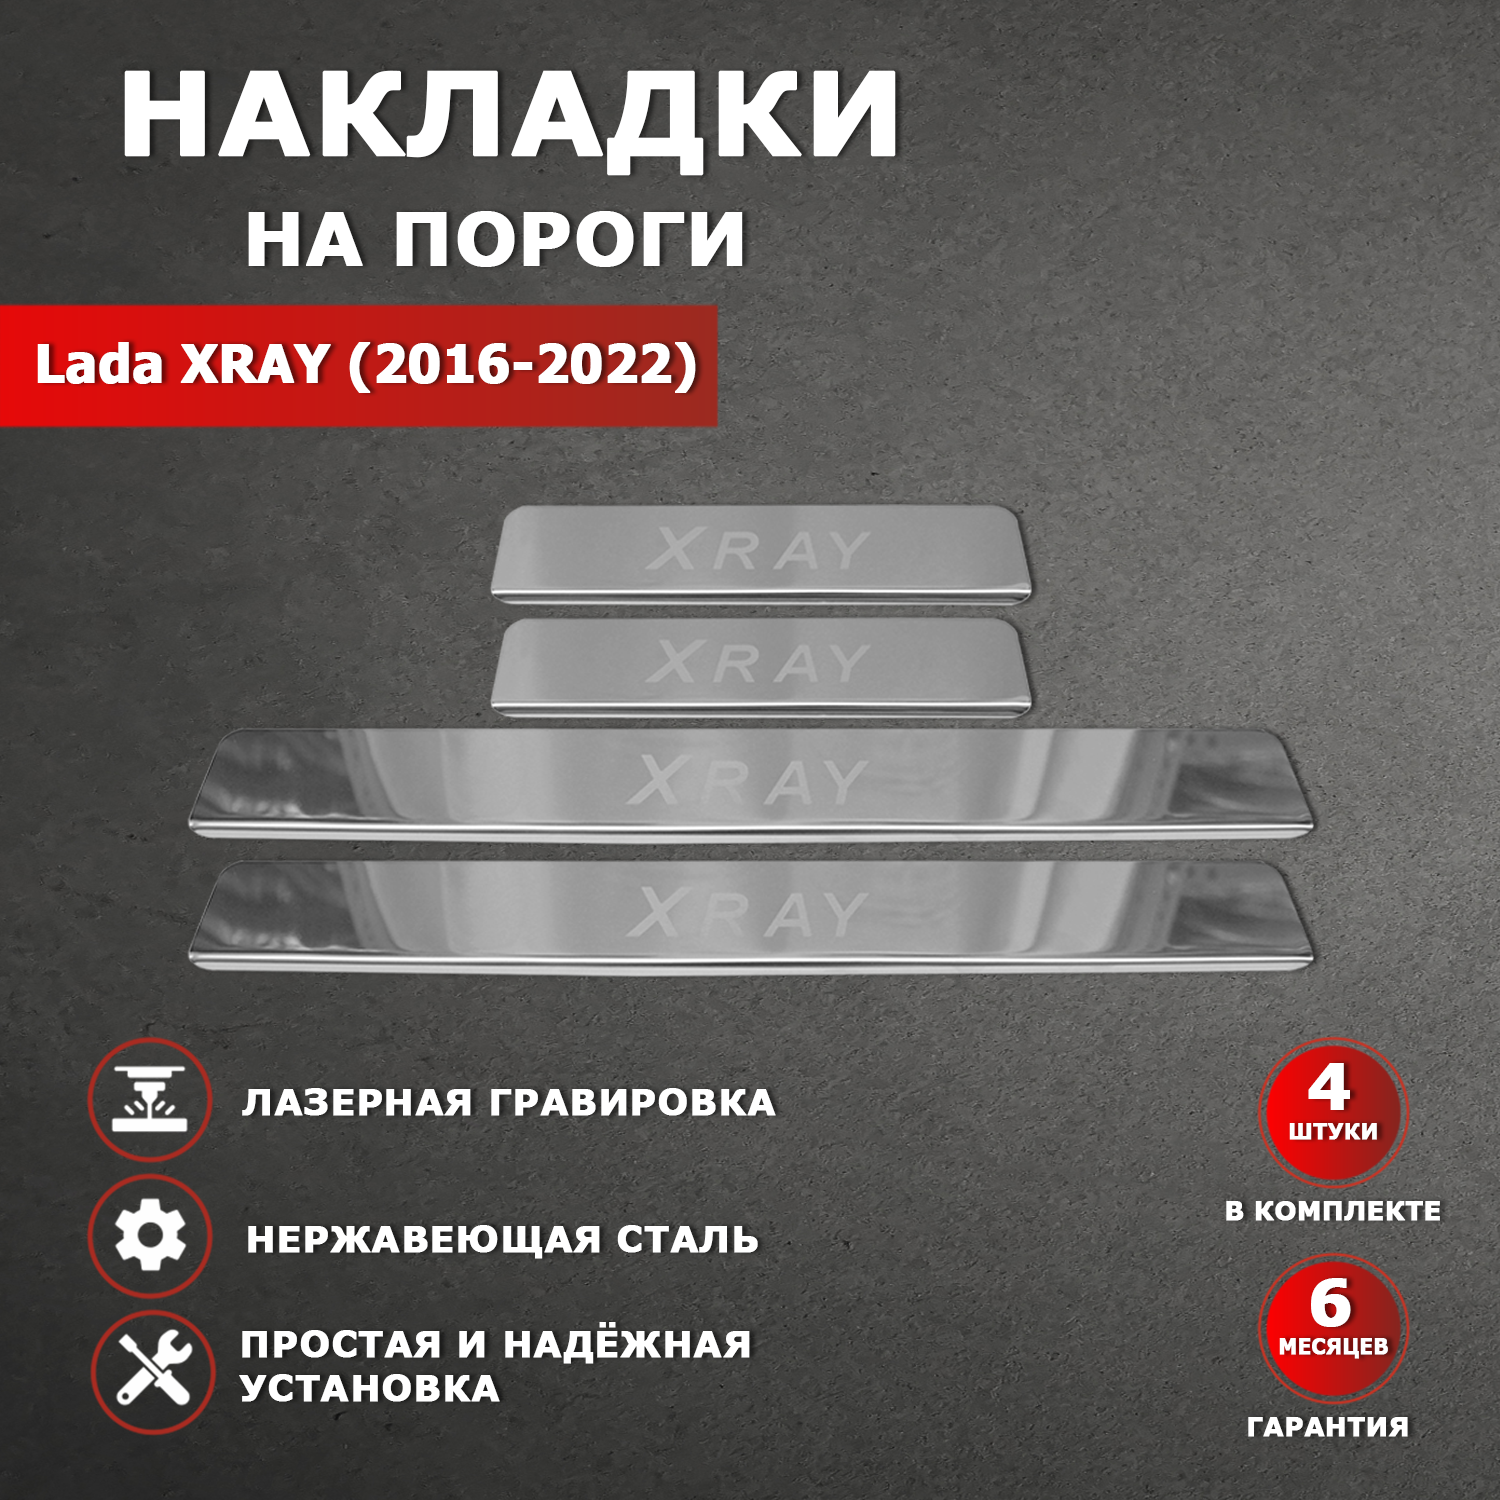 Накладки на пороги Лада Икс Рей / Lada XRAY гравировка (2016-2022)